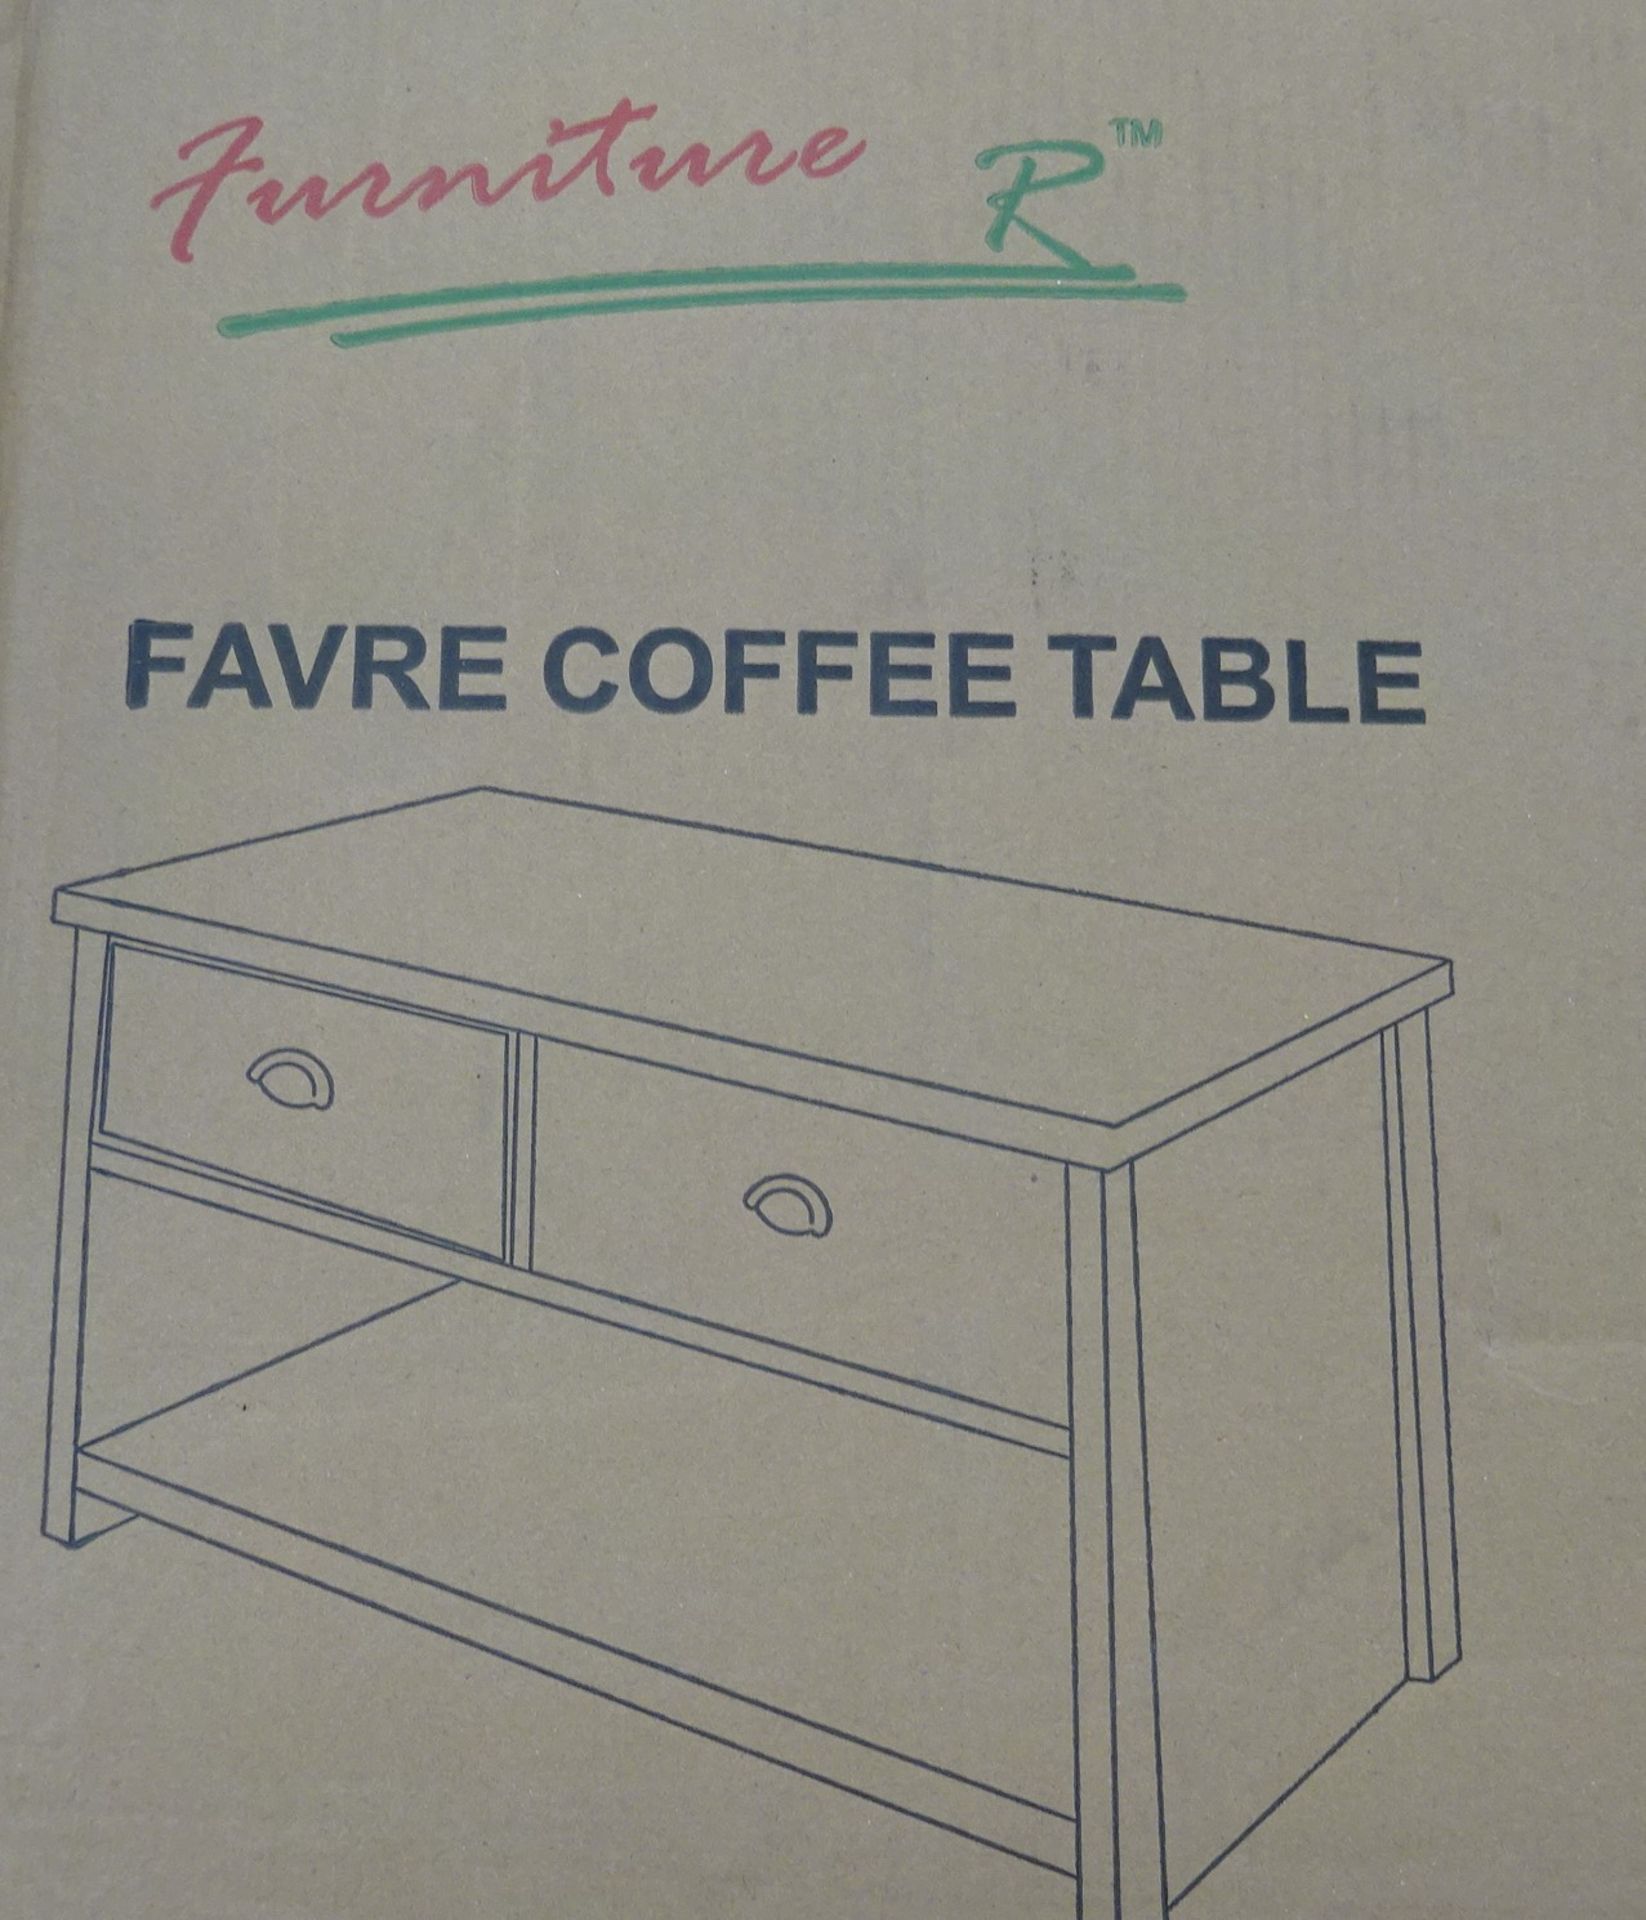 Richmond Coffee Table - RRP £81.99